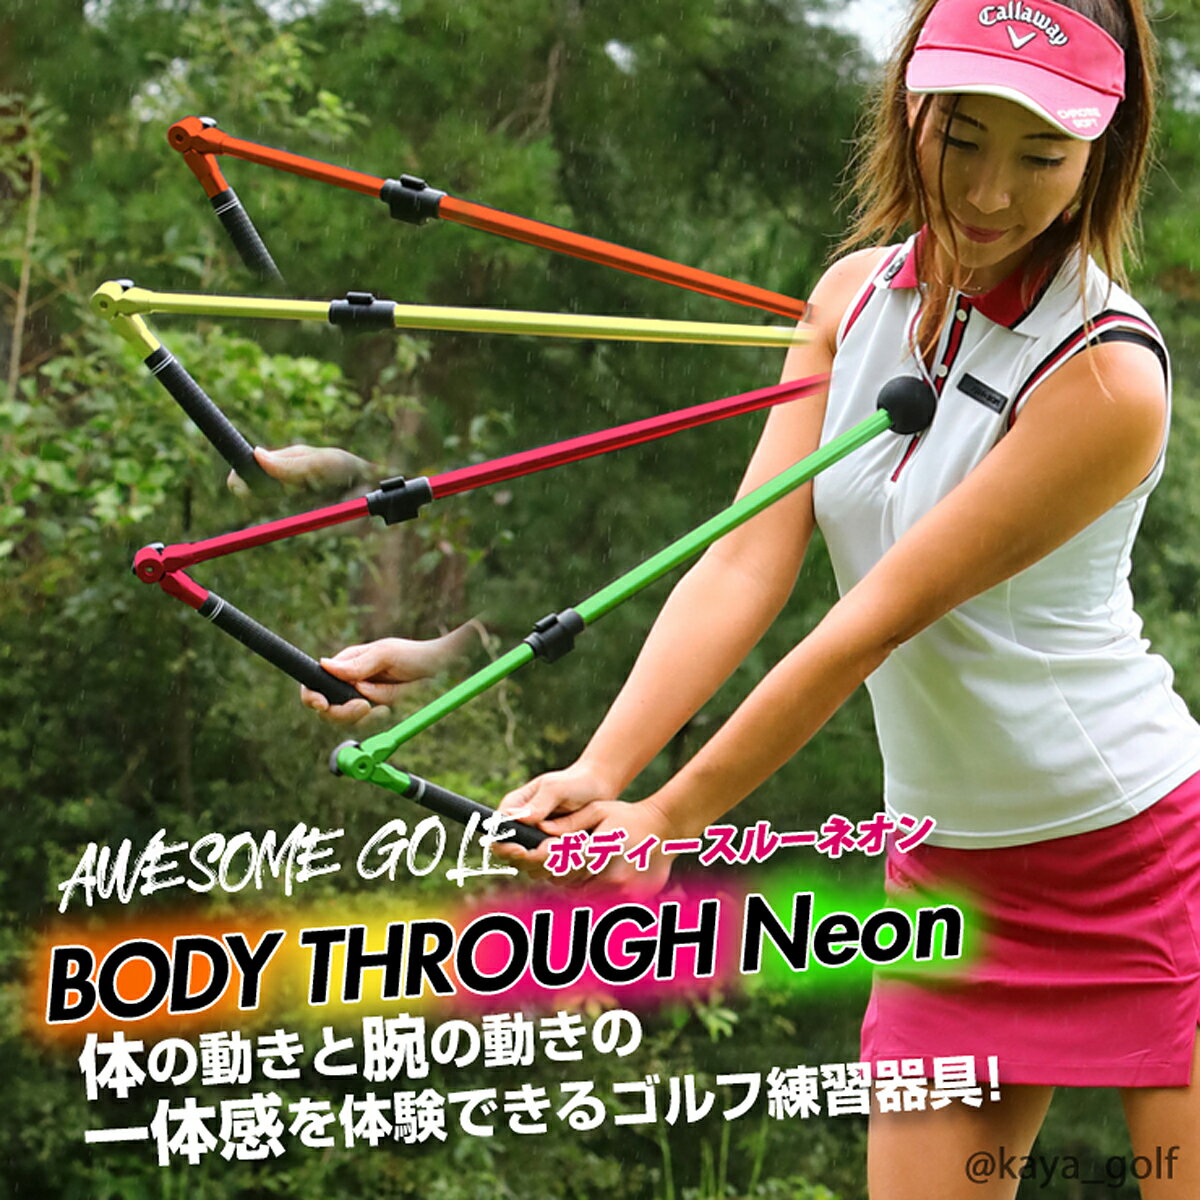 AWESOME Golf オーサムゴルフ日本正規品 BODY THROUGH NEON (ボディスルーネオン) 「 ゴルフスイング練習用品 」 【あす楽対応】